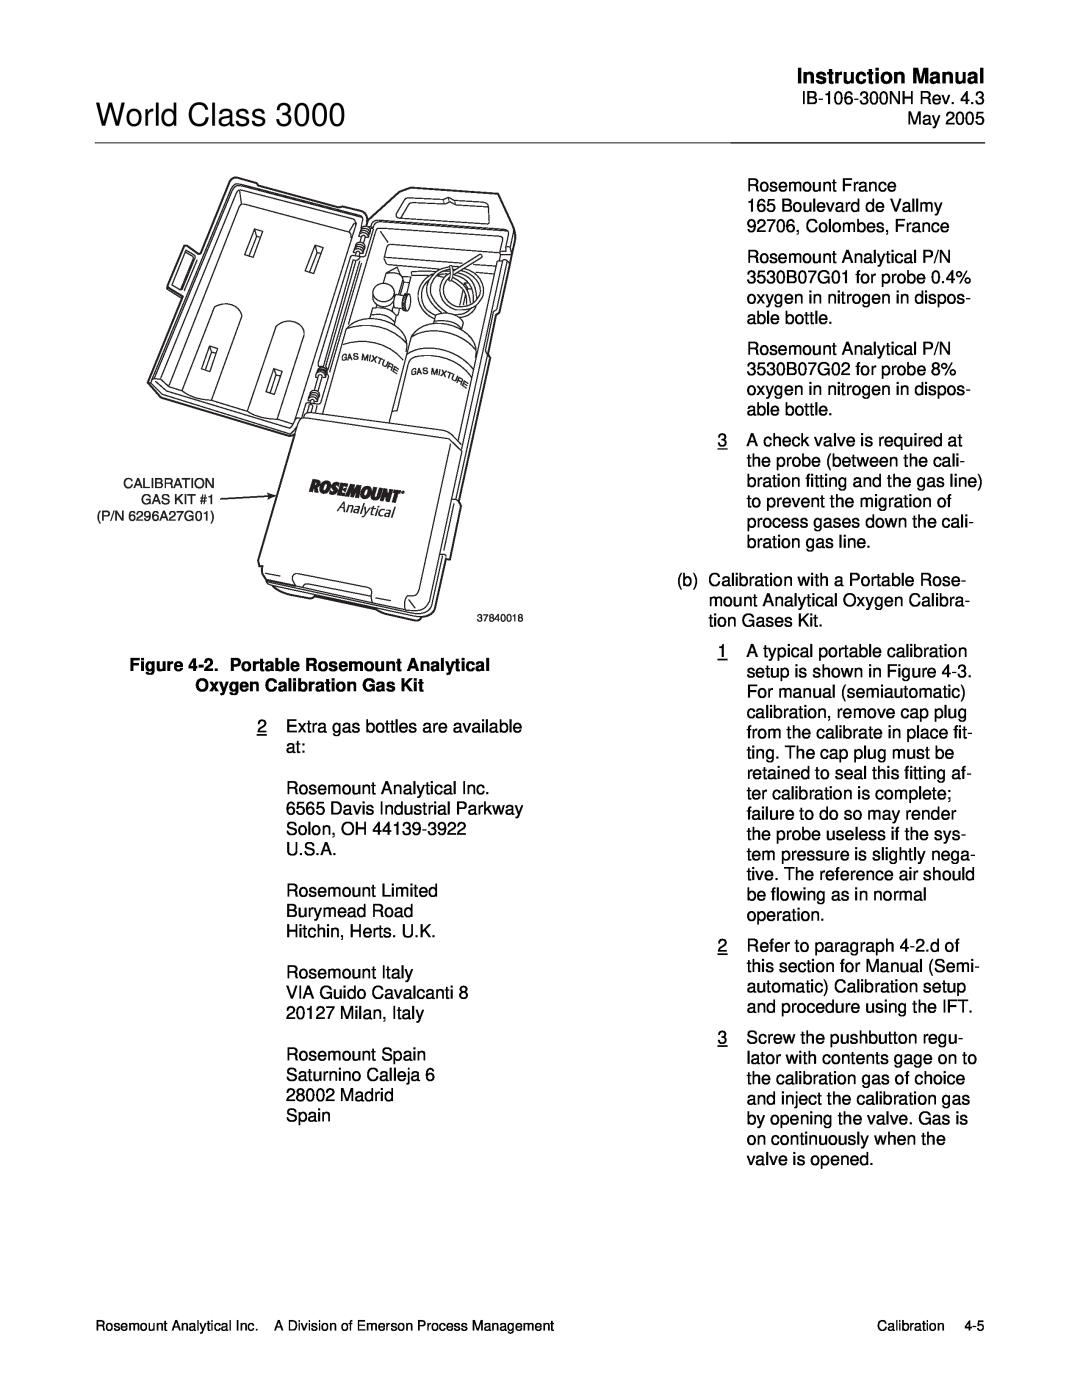 Emerson 3000 World Class, Instruction Manual, 2.Portable Rosemount Analytical, Oxygen Calibration Gas Kit 